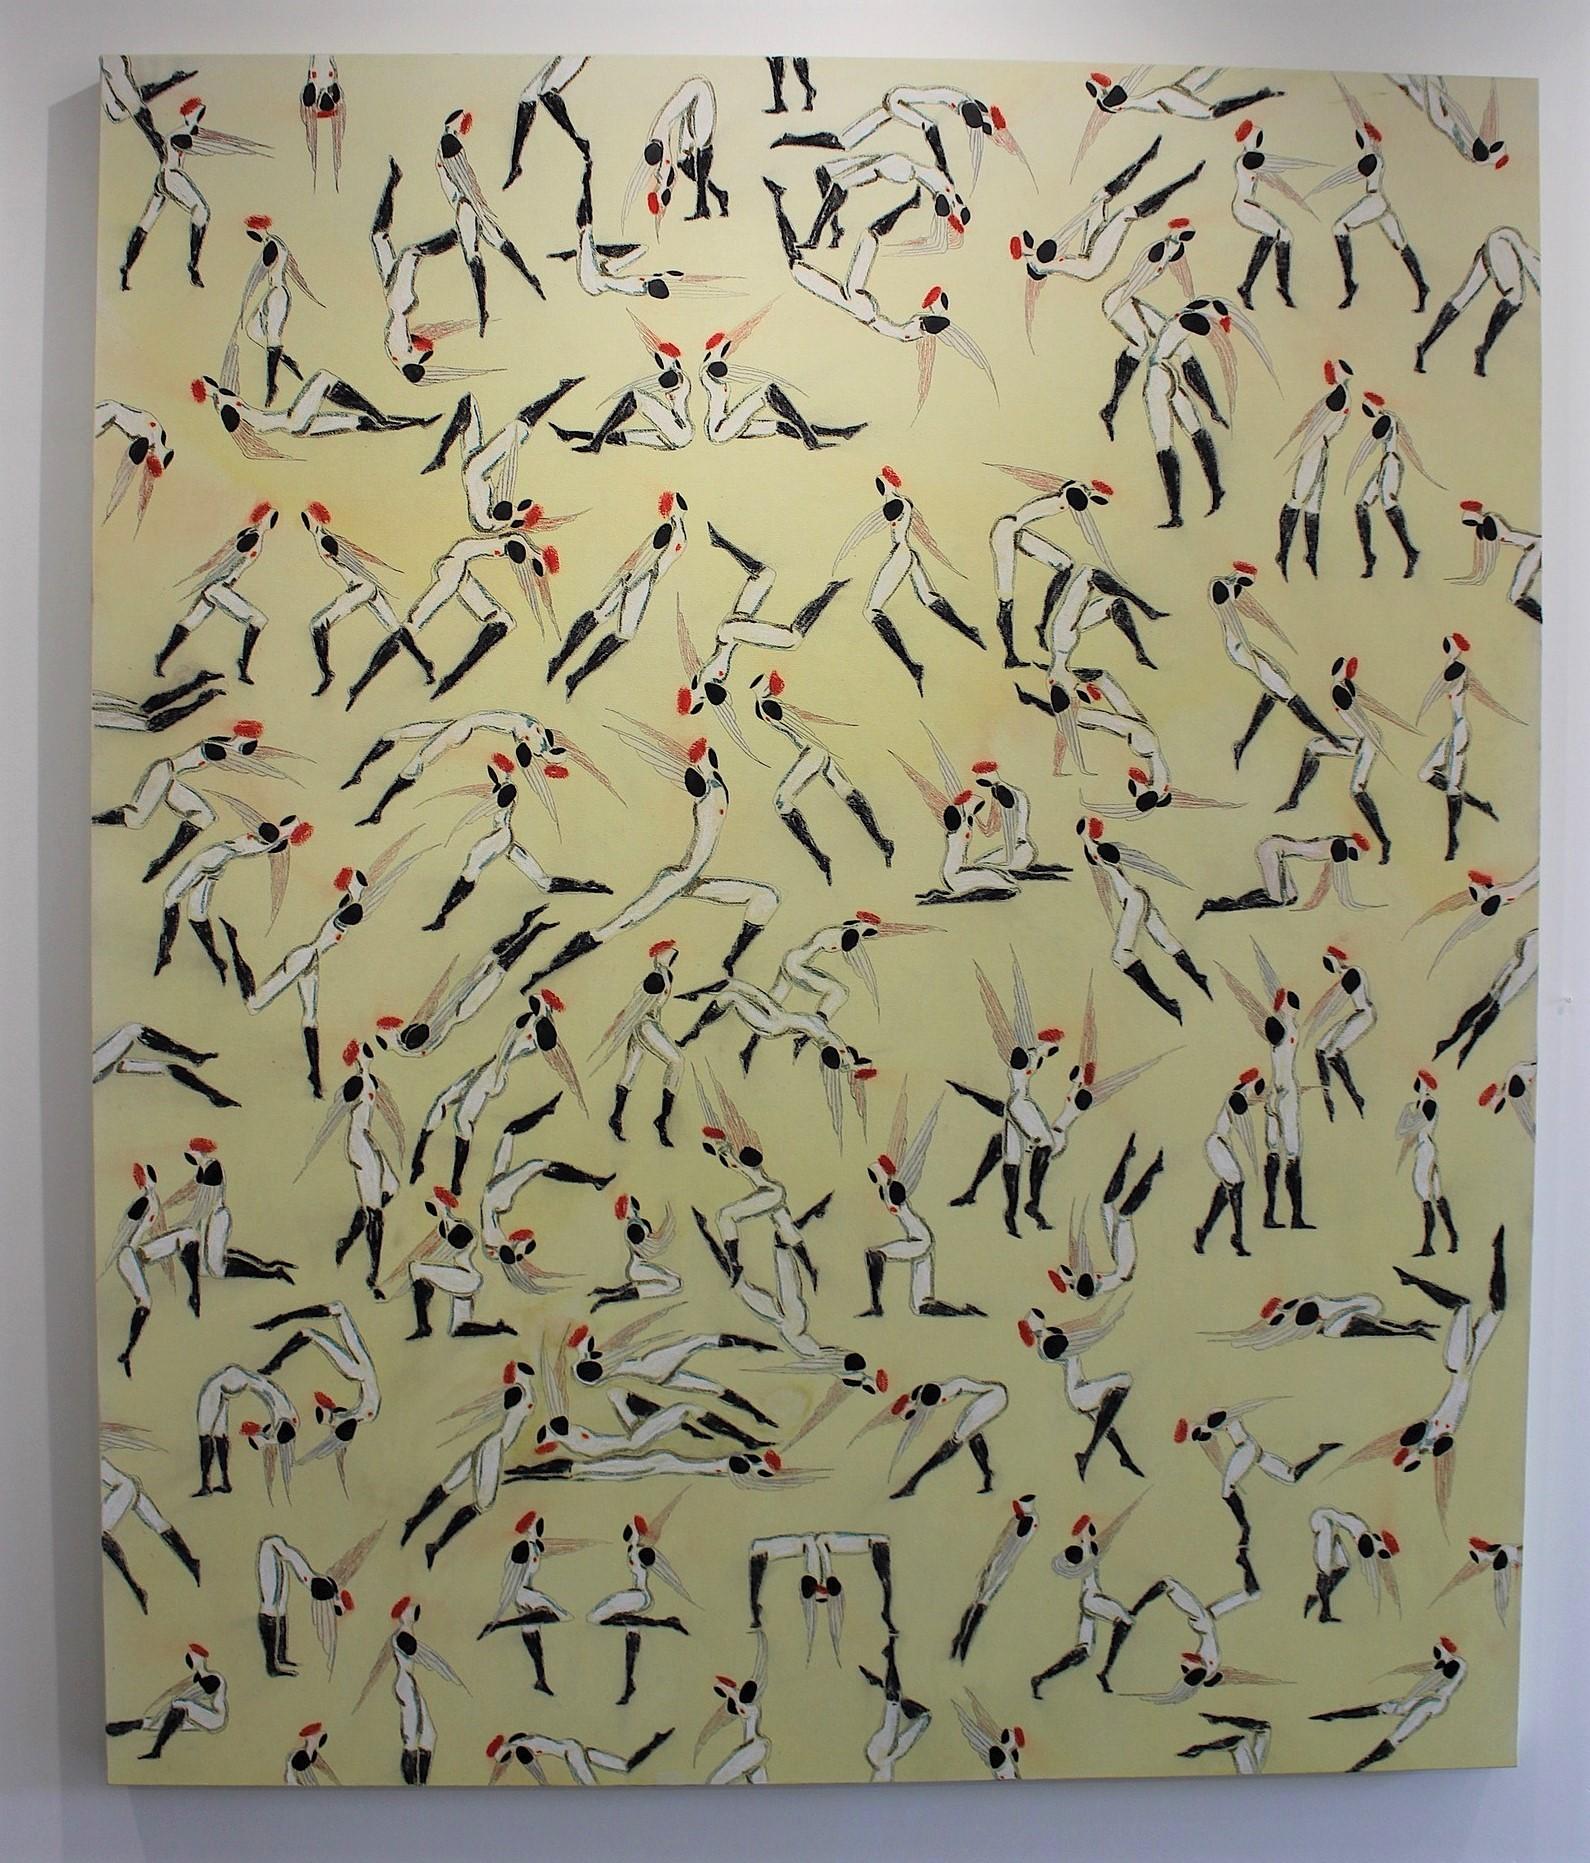 Quarantine (LARGE!! 6'x5' - 183 x 152cm) - Painting by Ryan Wilks